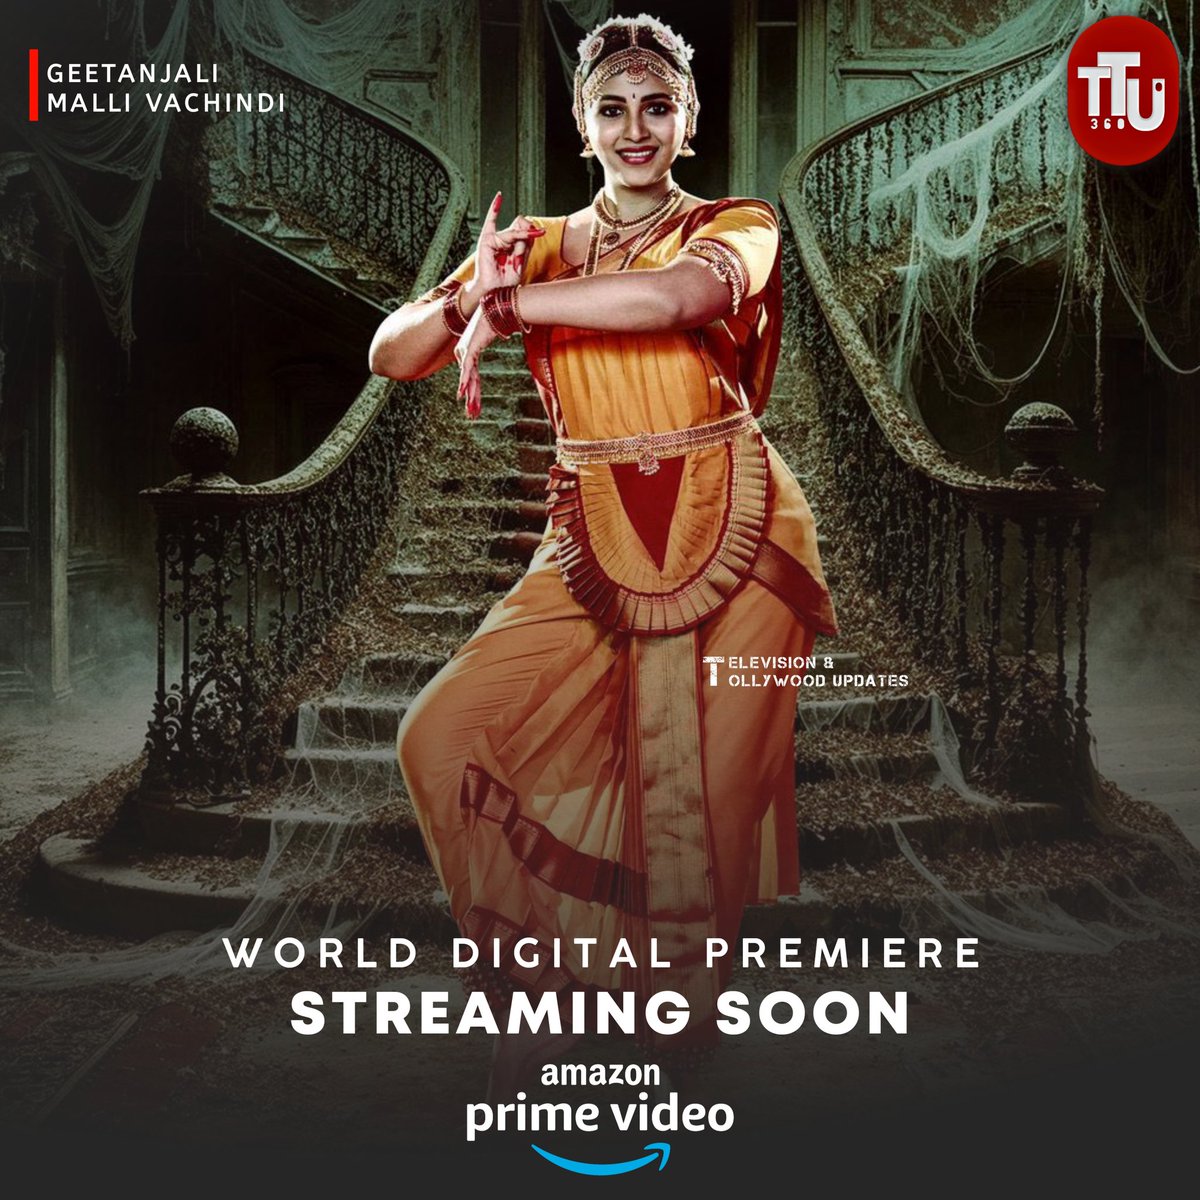 World Digital Premiere
#GeetanjaliMalliVachindi Streaming Soon on #AmazonPrimeVideo

#GMVonPrime
#Anjali50 #Anjali #KonaVenkat #MVVSatyanarayana #GV #ShivaTurlapati #SrinivasaReddy #Satya #SatyamRajesh #Sunil #BhanuBogavarapu #ChotaKPrasad